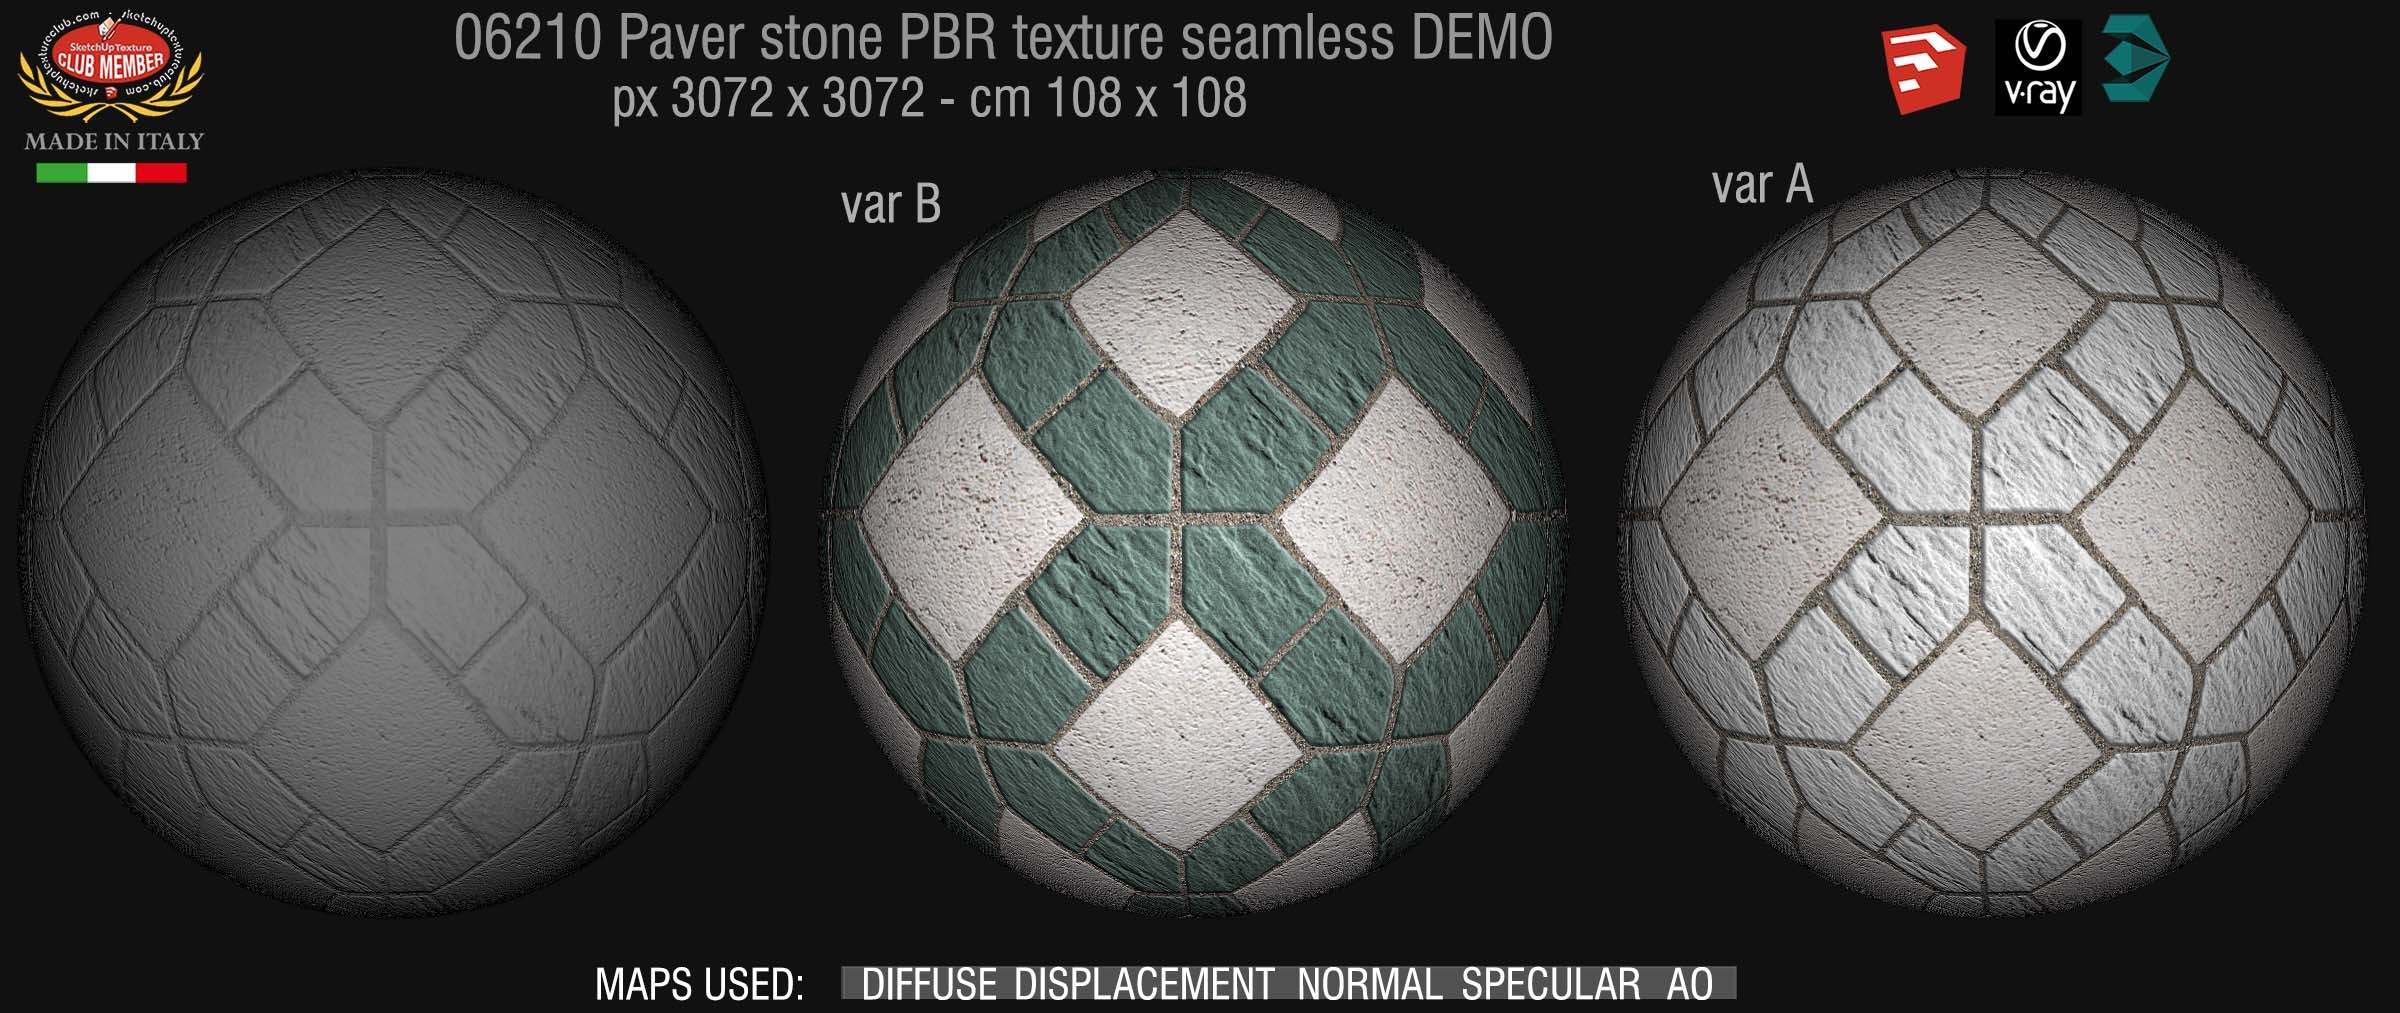 06210 paver stone PBR texture seamless DEMO